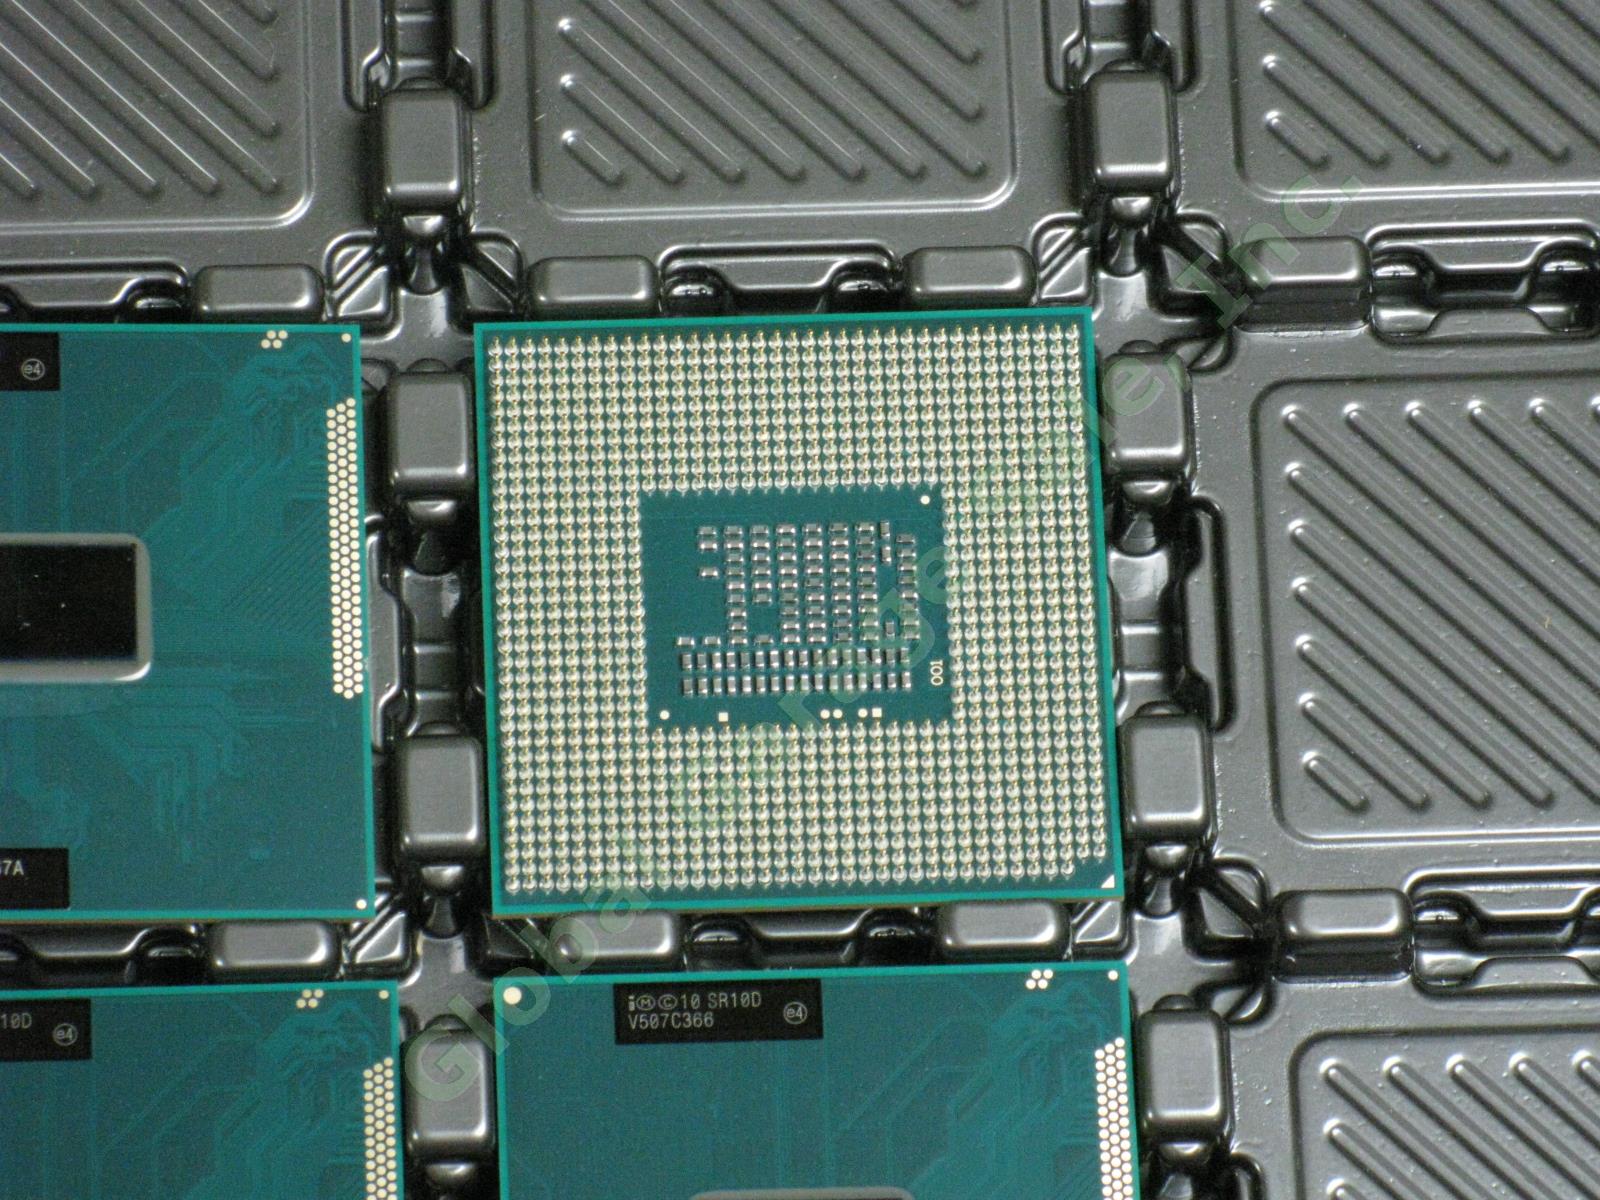 9 CPU Lot Intel Celeron Dual Core 1020E Ivy Bridge 2.2 GHz Processor G2 SR10D NR 2